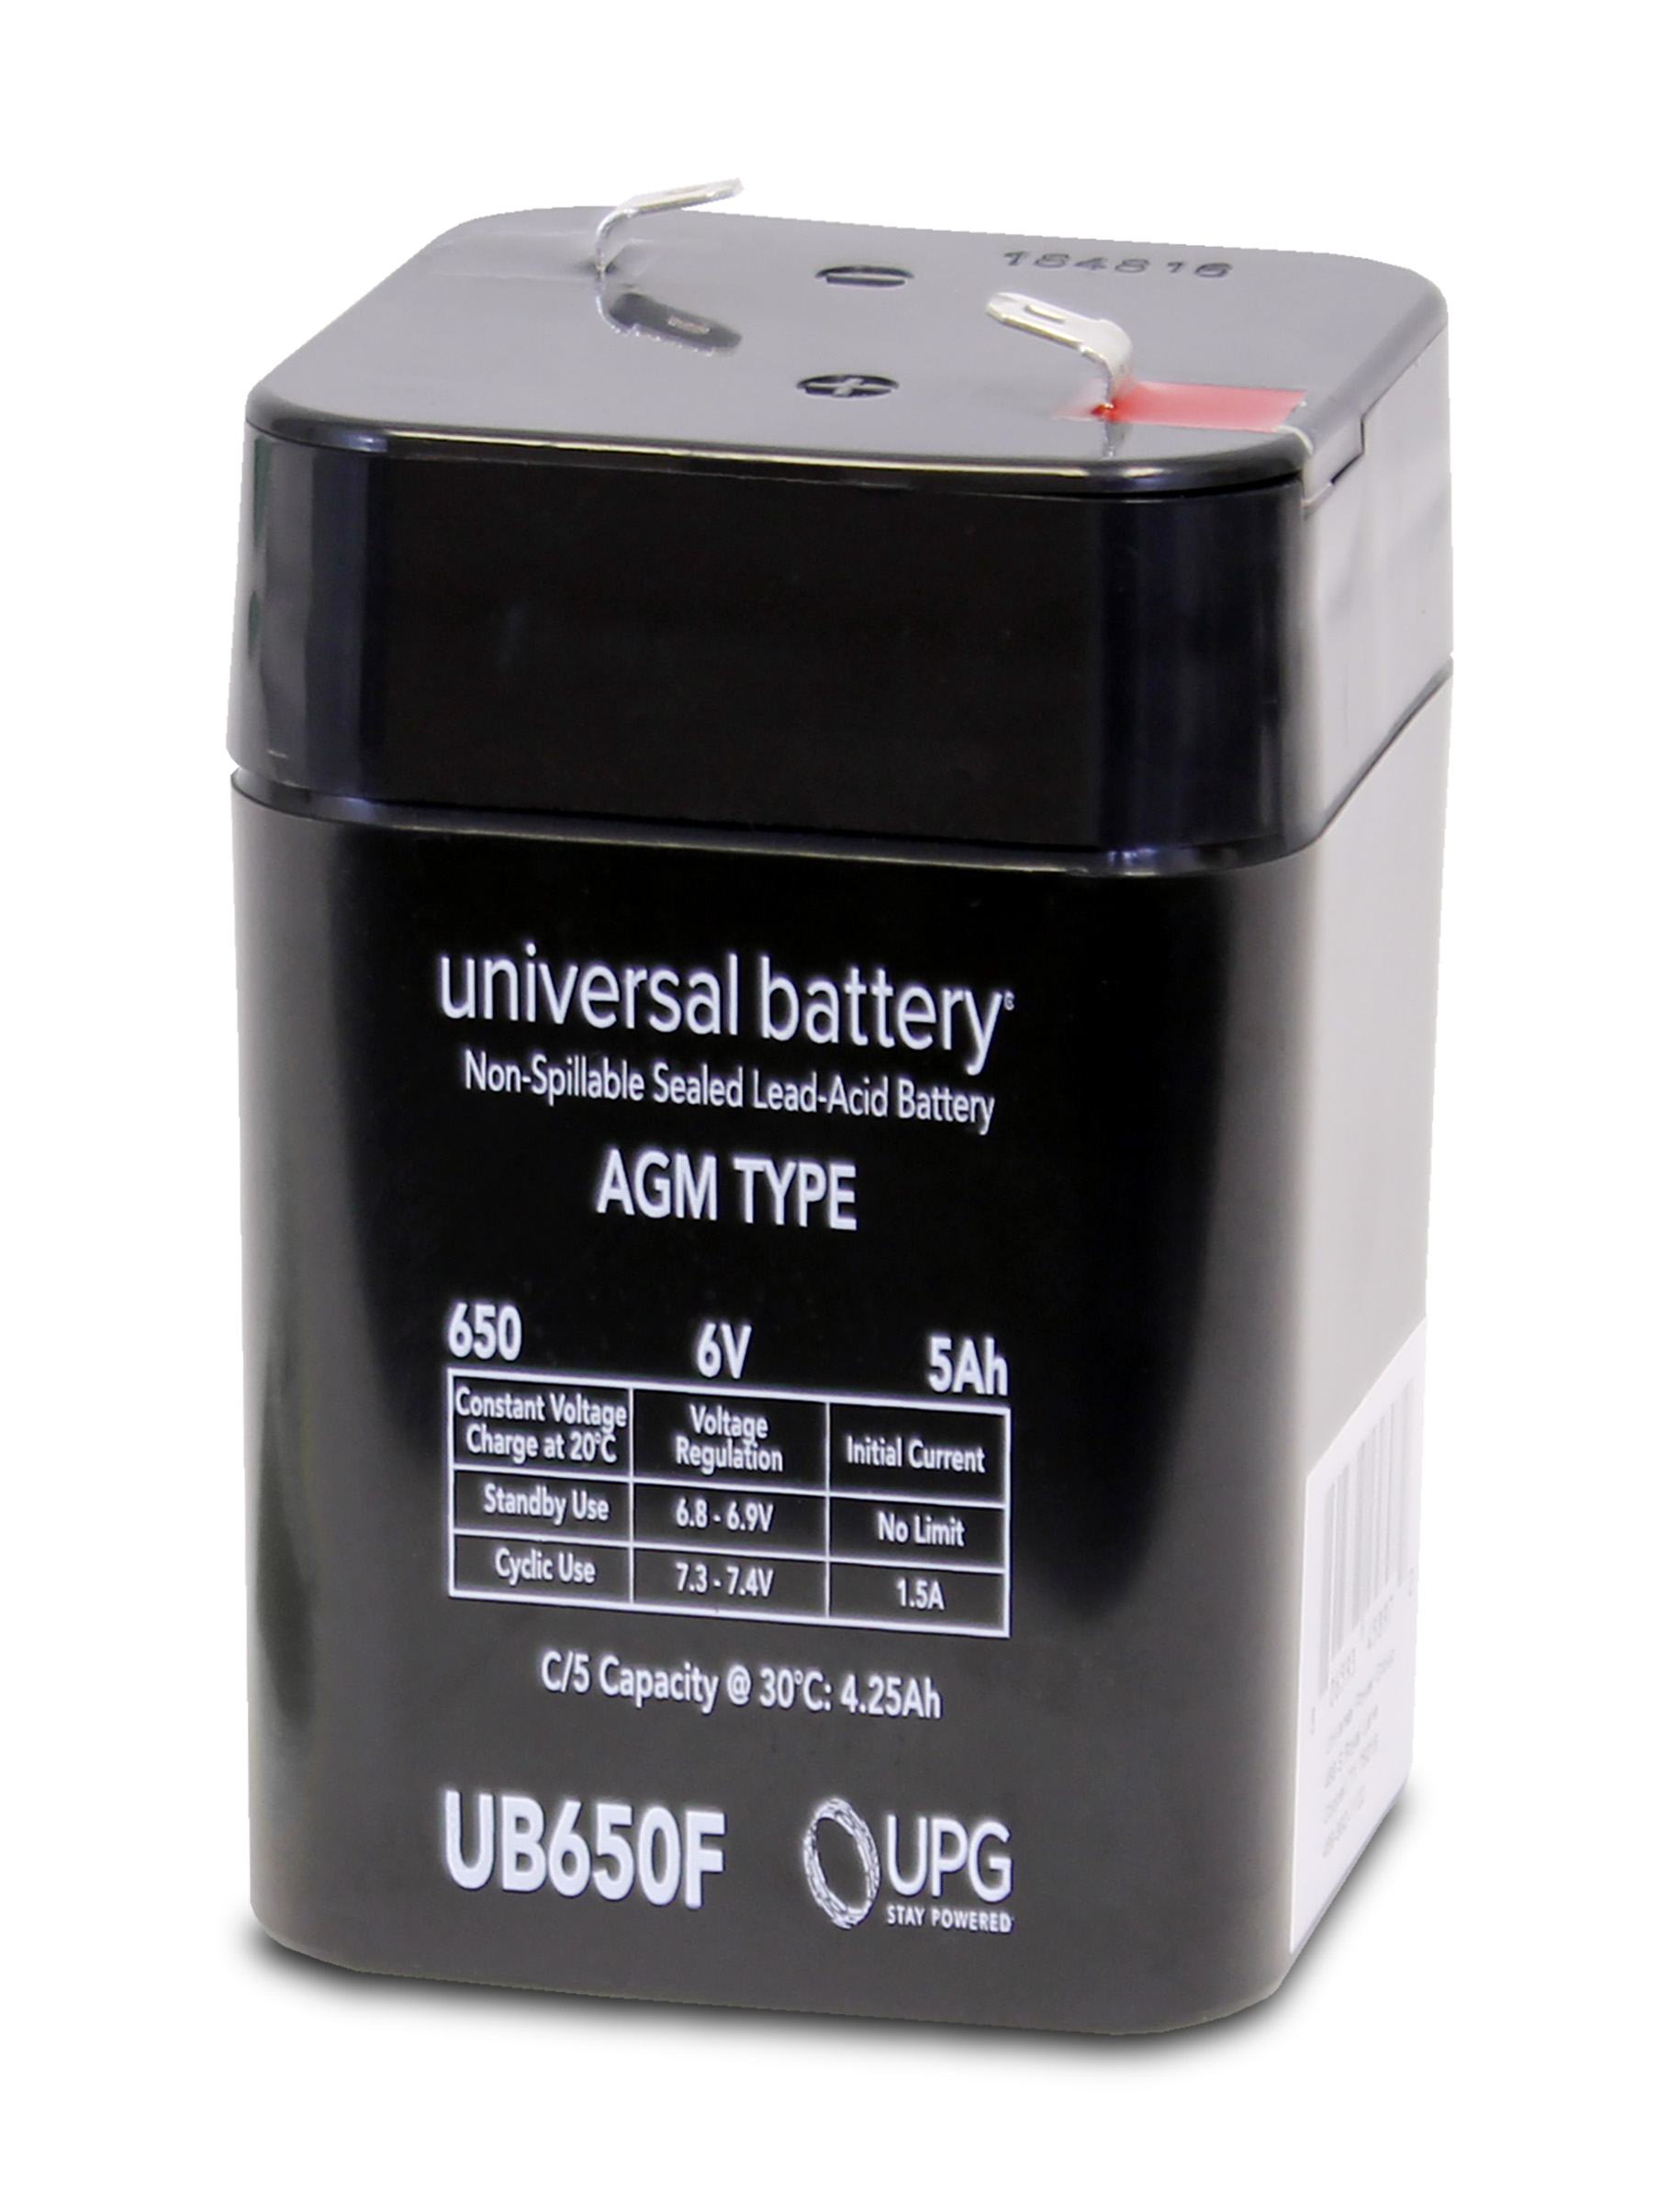 UPG UB1290 (40748) 12V 9Ah Sealed Lead Acid Replacement Battery